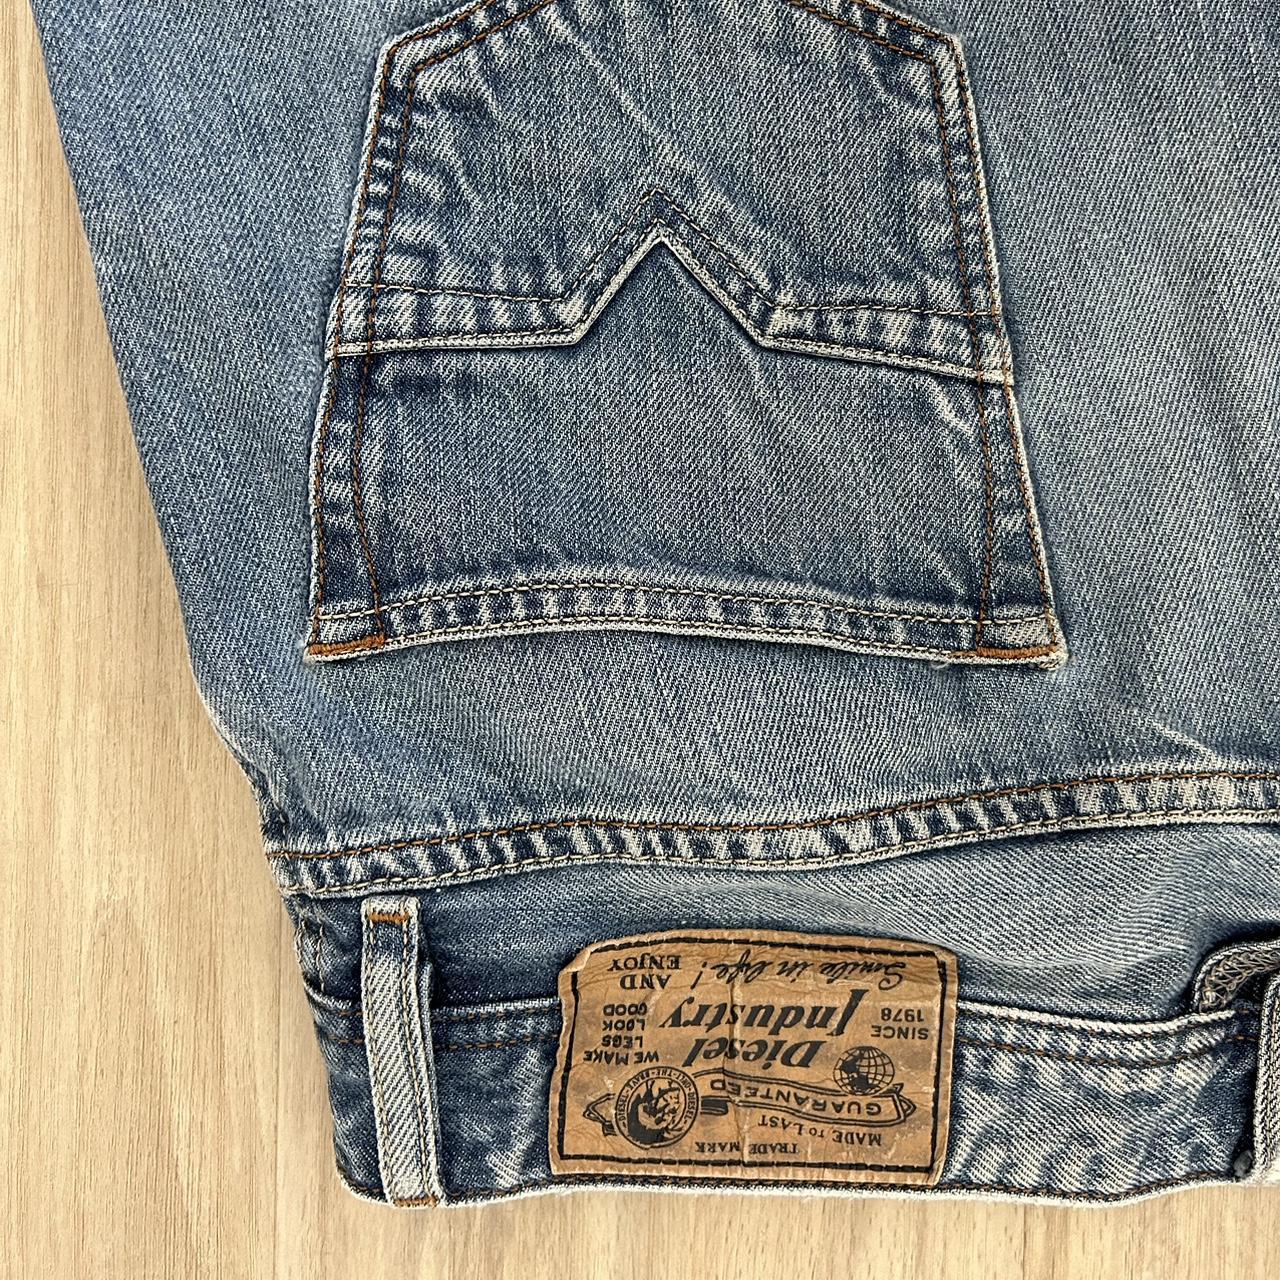 DIESEL INDUSTRY brand jeans (31 waist, 30 inseam)... - Depop